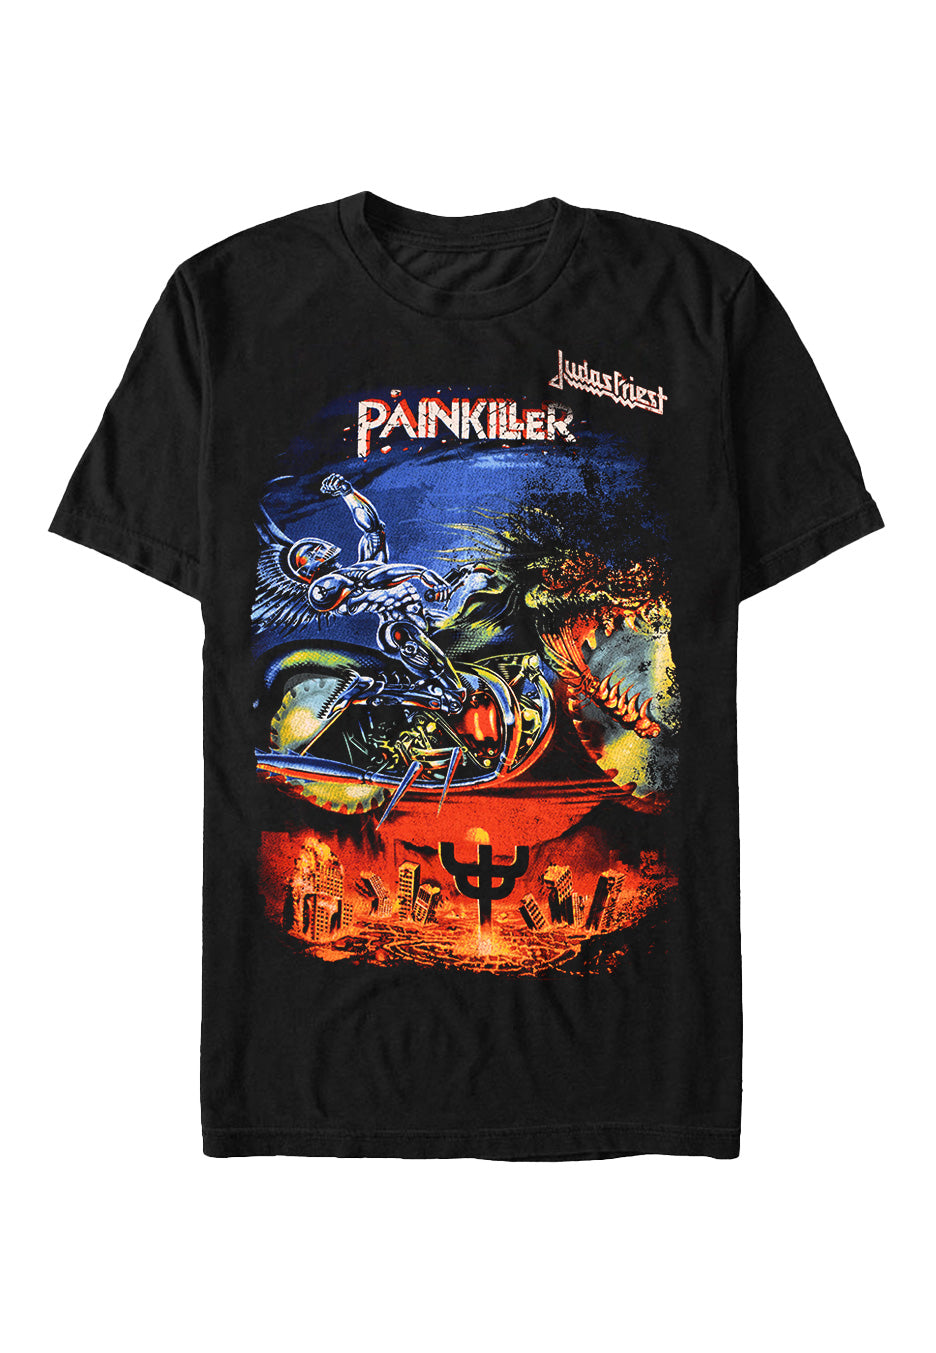 Judas Priest - Painkiller - T-Shirt